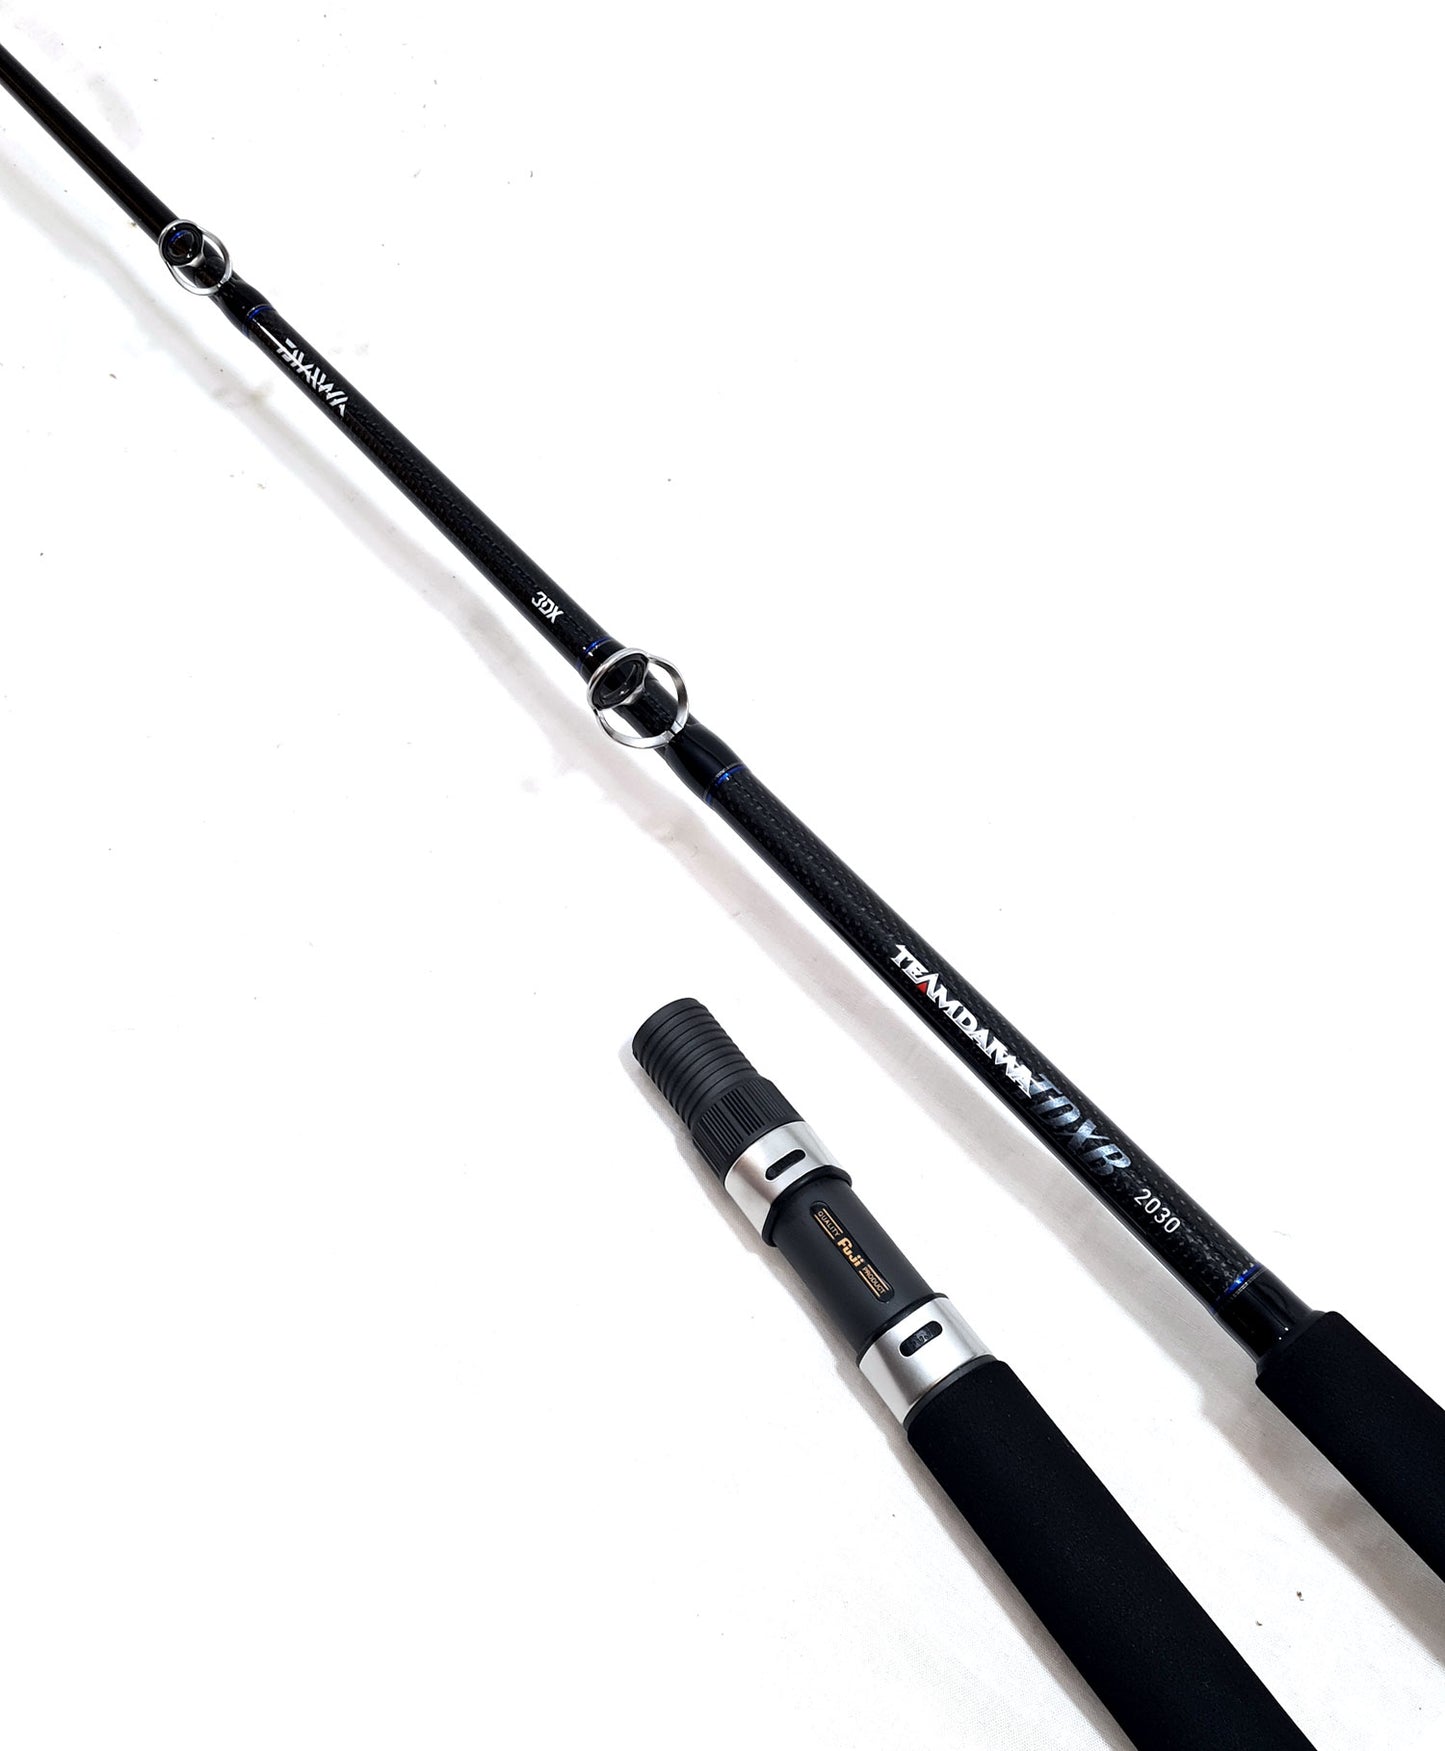 New Team Daiwa X Boat Fishing Rods - All Models / Sizes